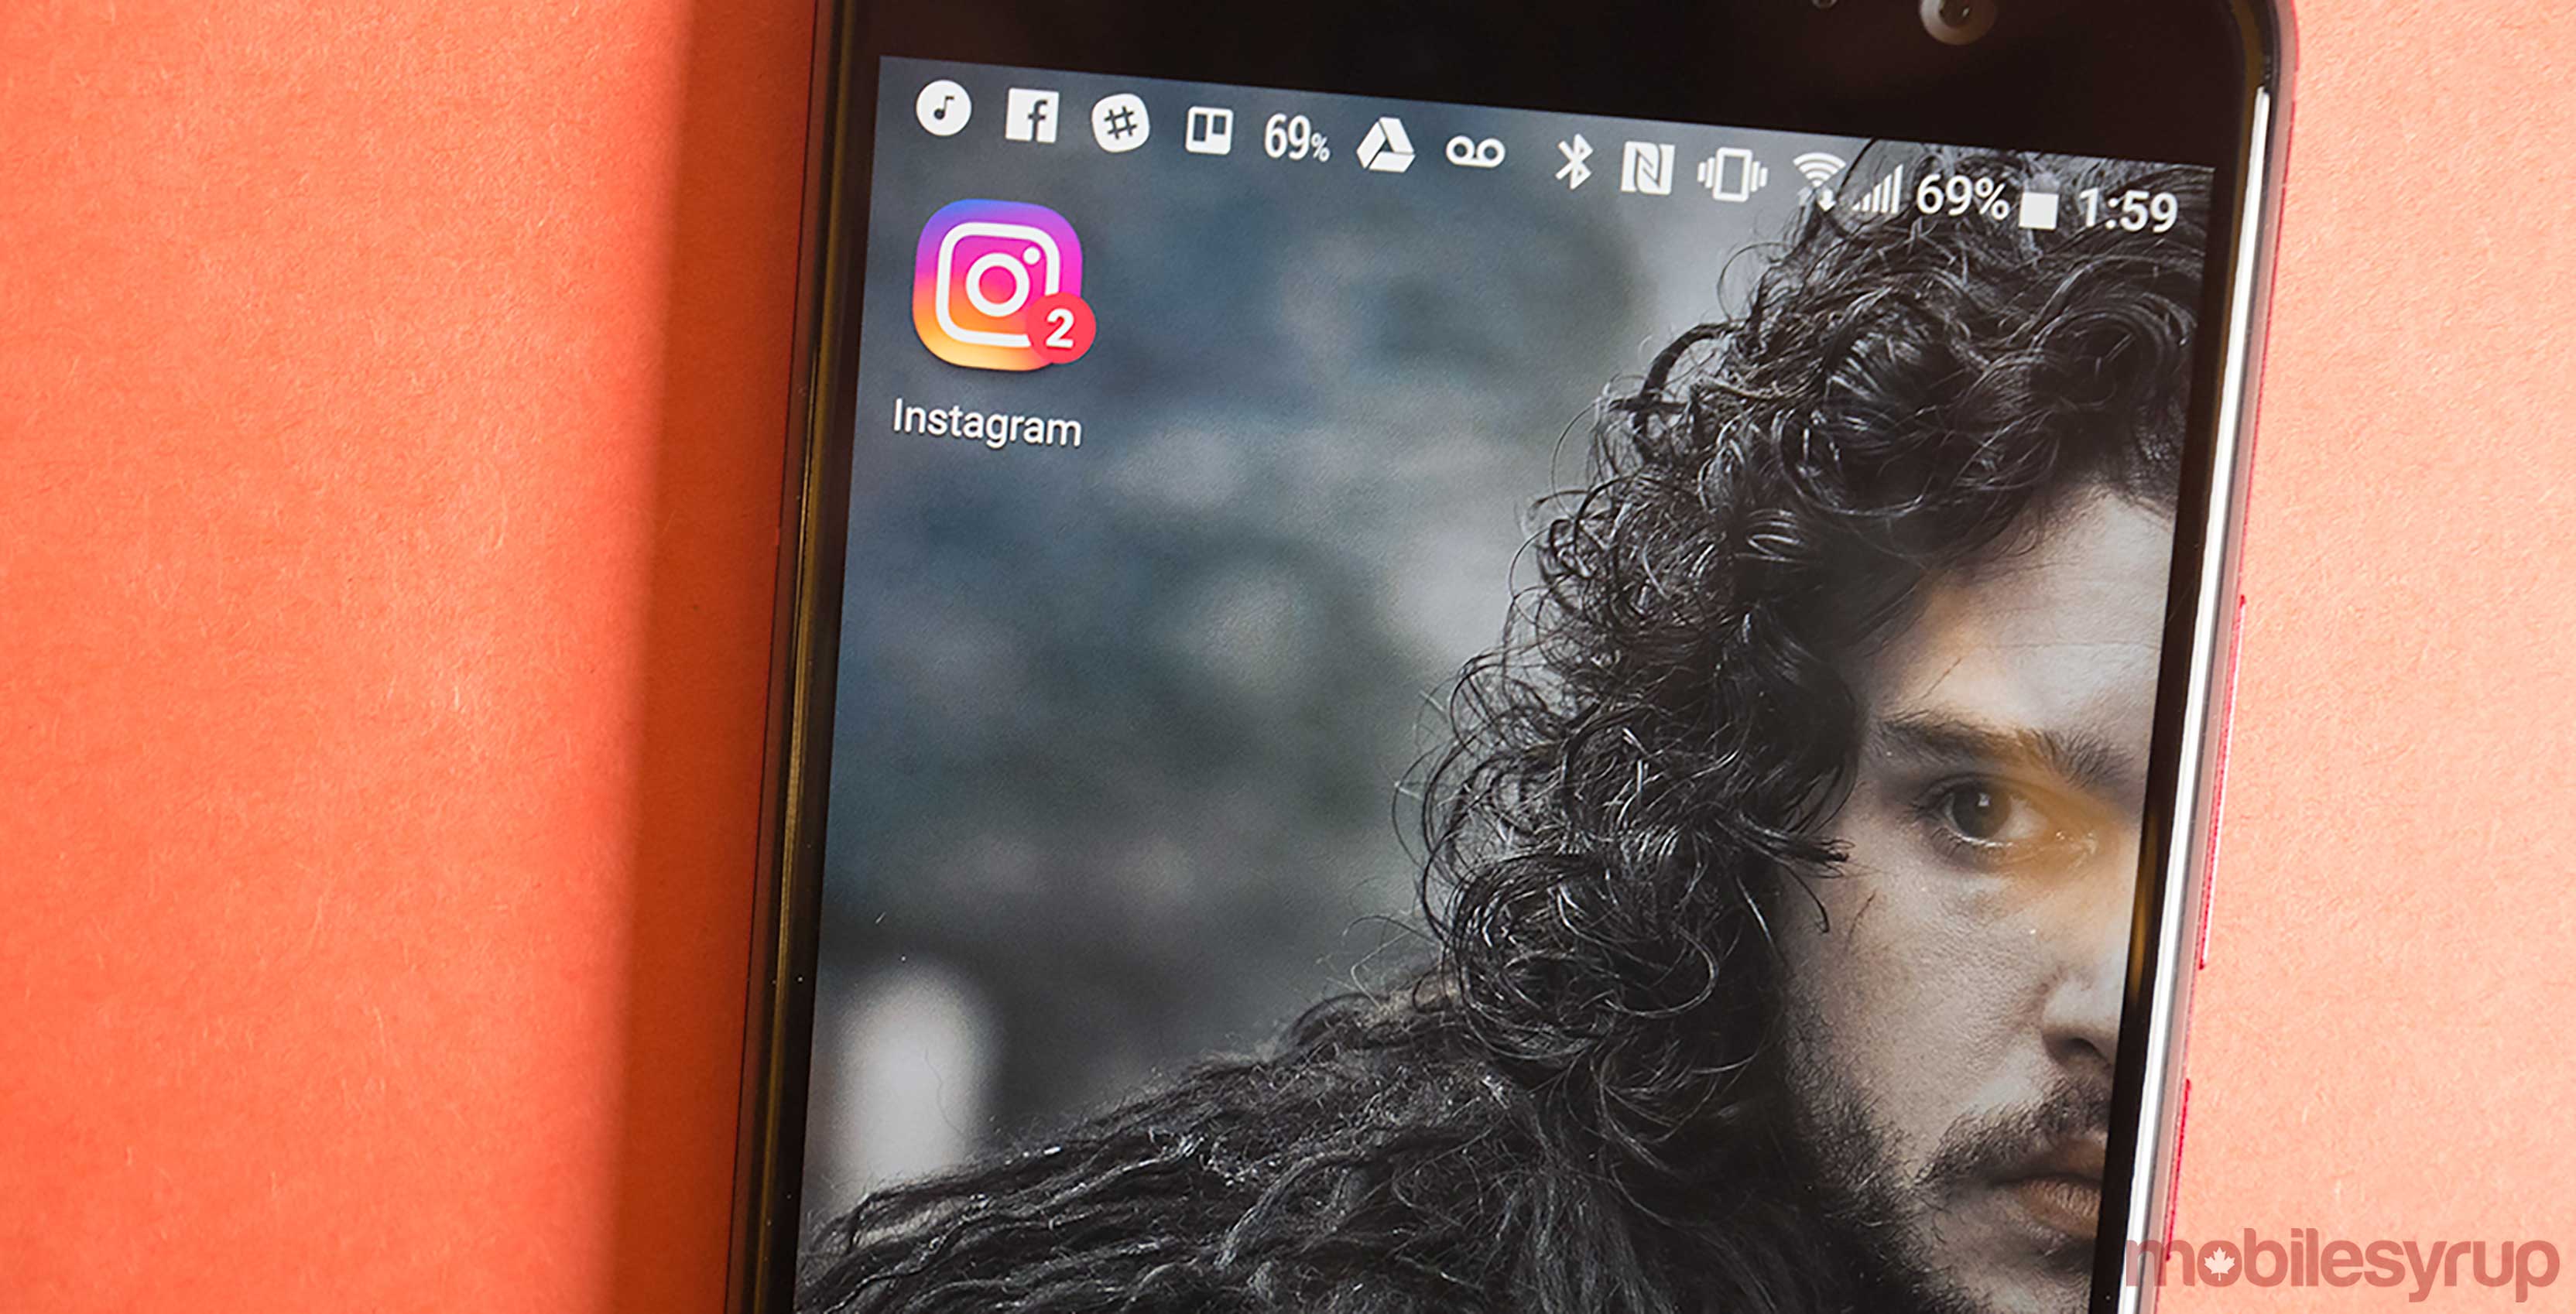 Instagram Jon Snow phone